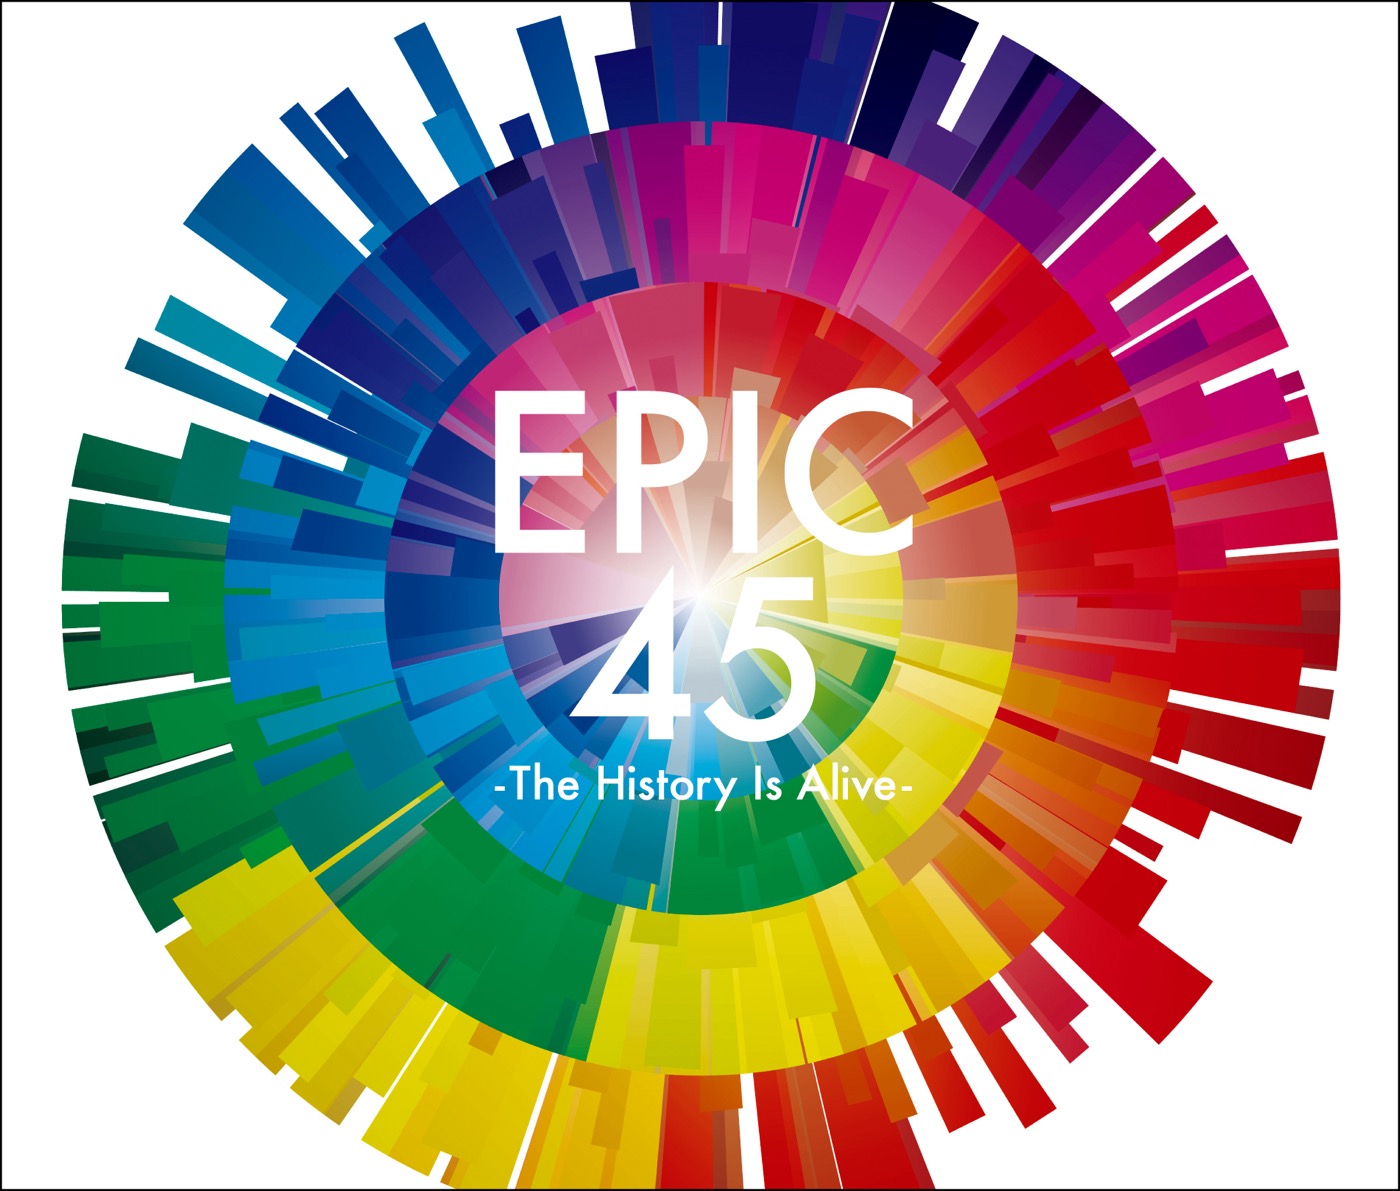 EPICレーベルの45年を彩った名曲を収録した3枚組コンピレーション『EPIC 45 -The History Is Alive-』のリリースが決定